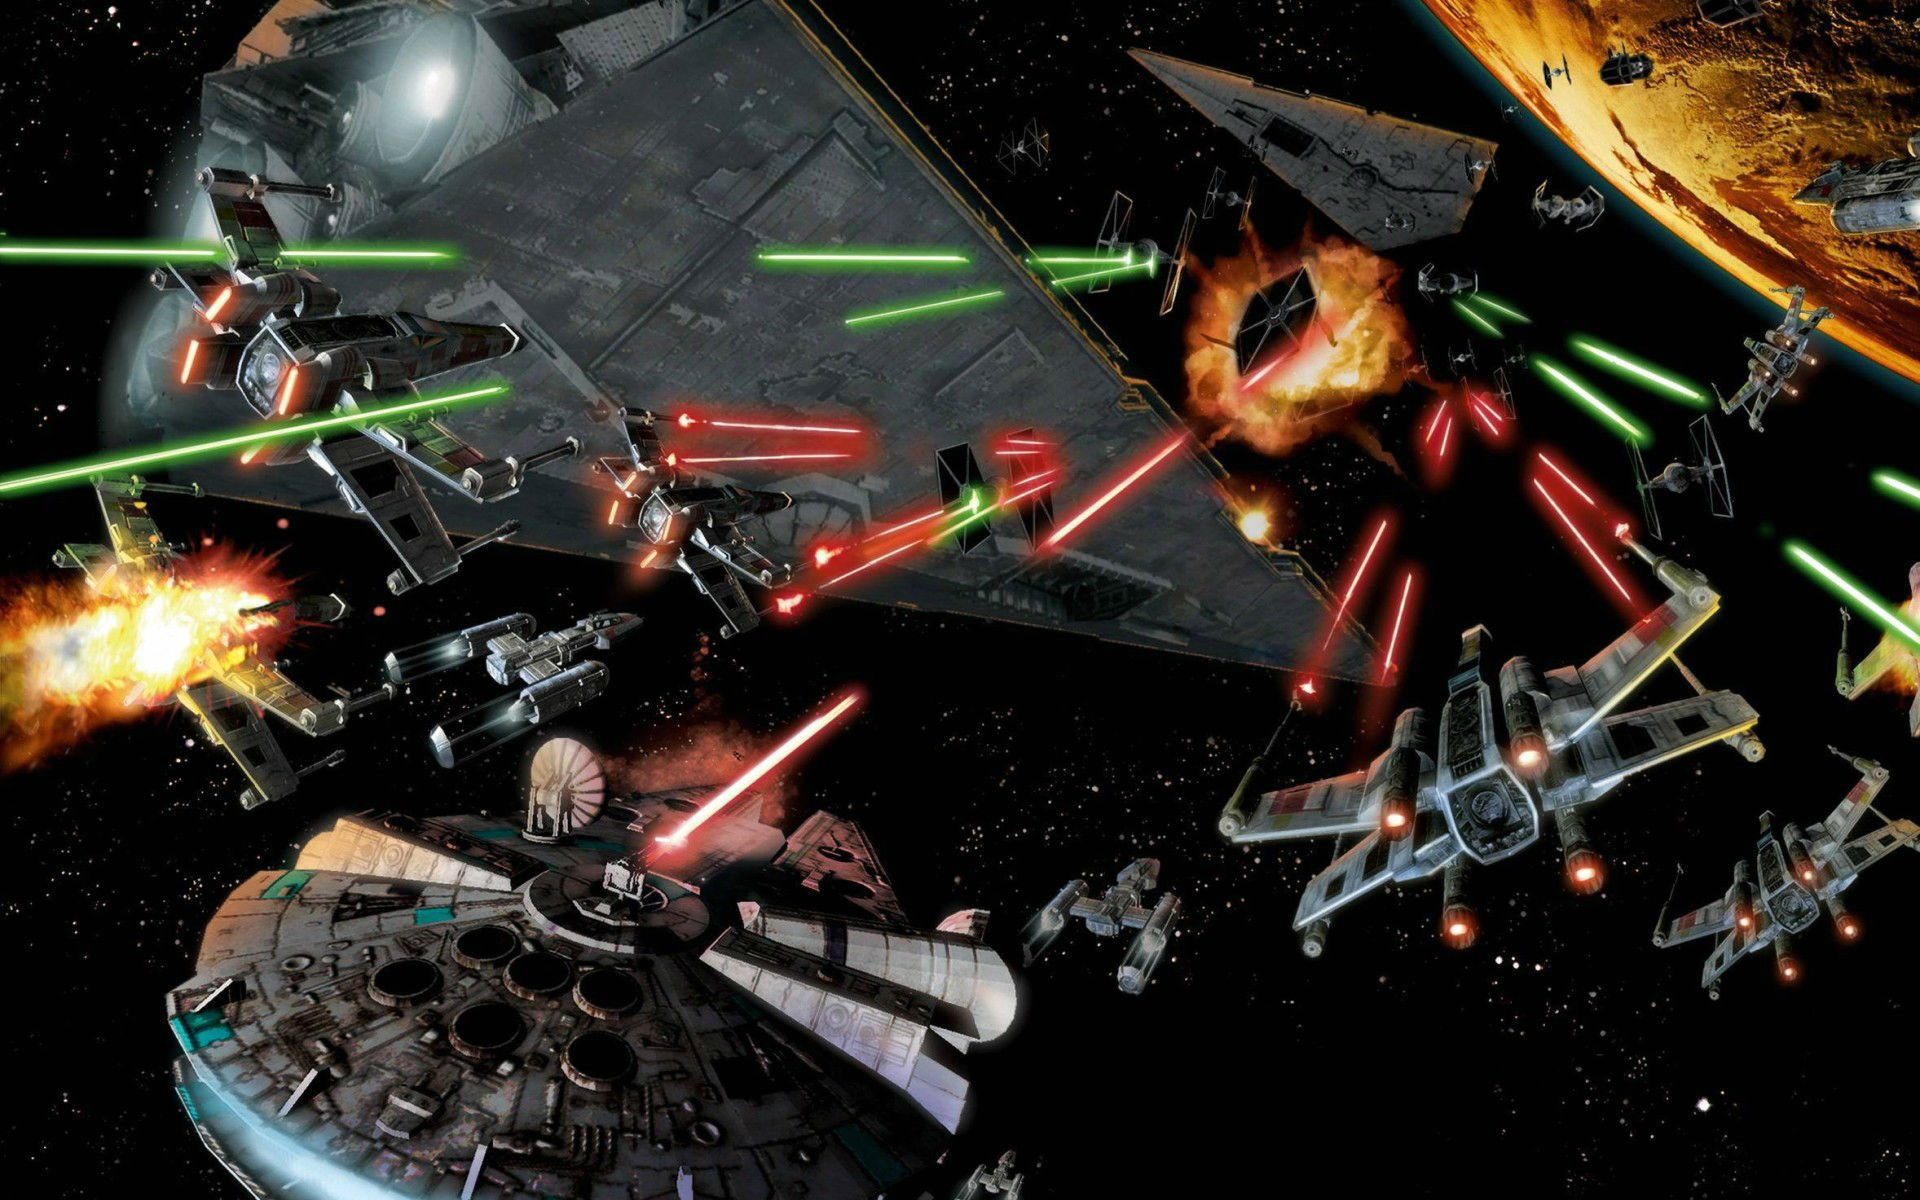 Star Wars Space Battle Wallpaper 61 images